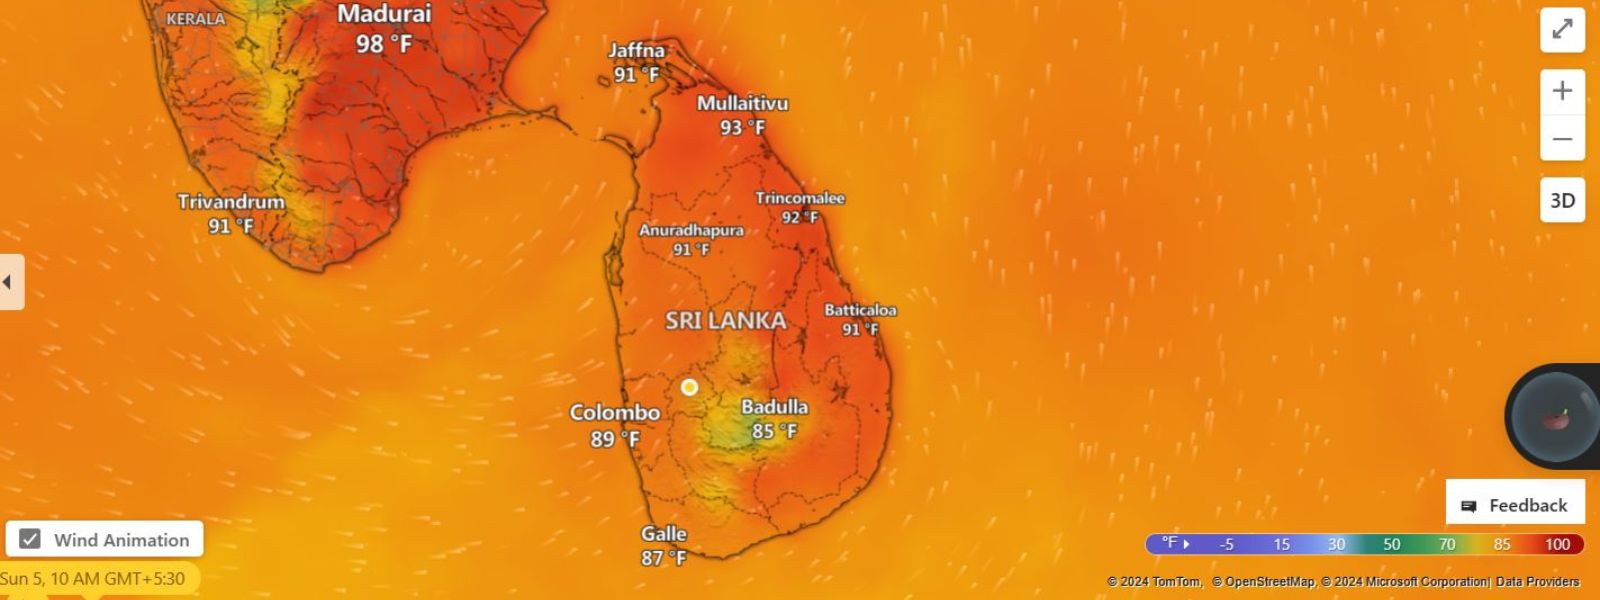 INSIDE AN OVEN : Extreme Heat Hits Sri Lanka